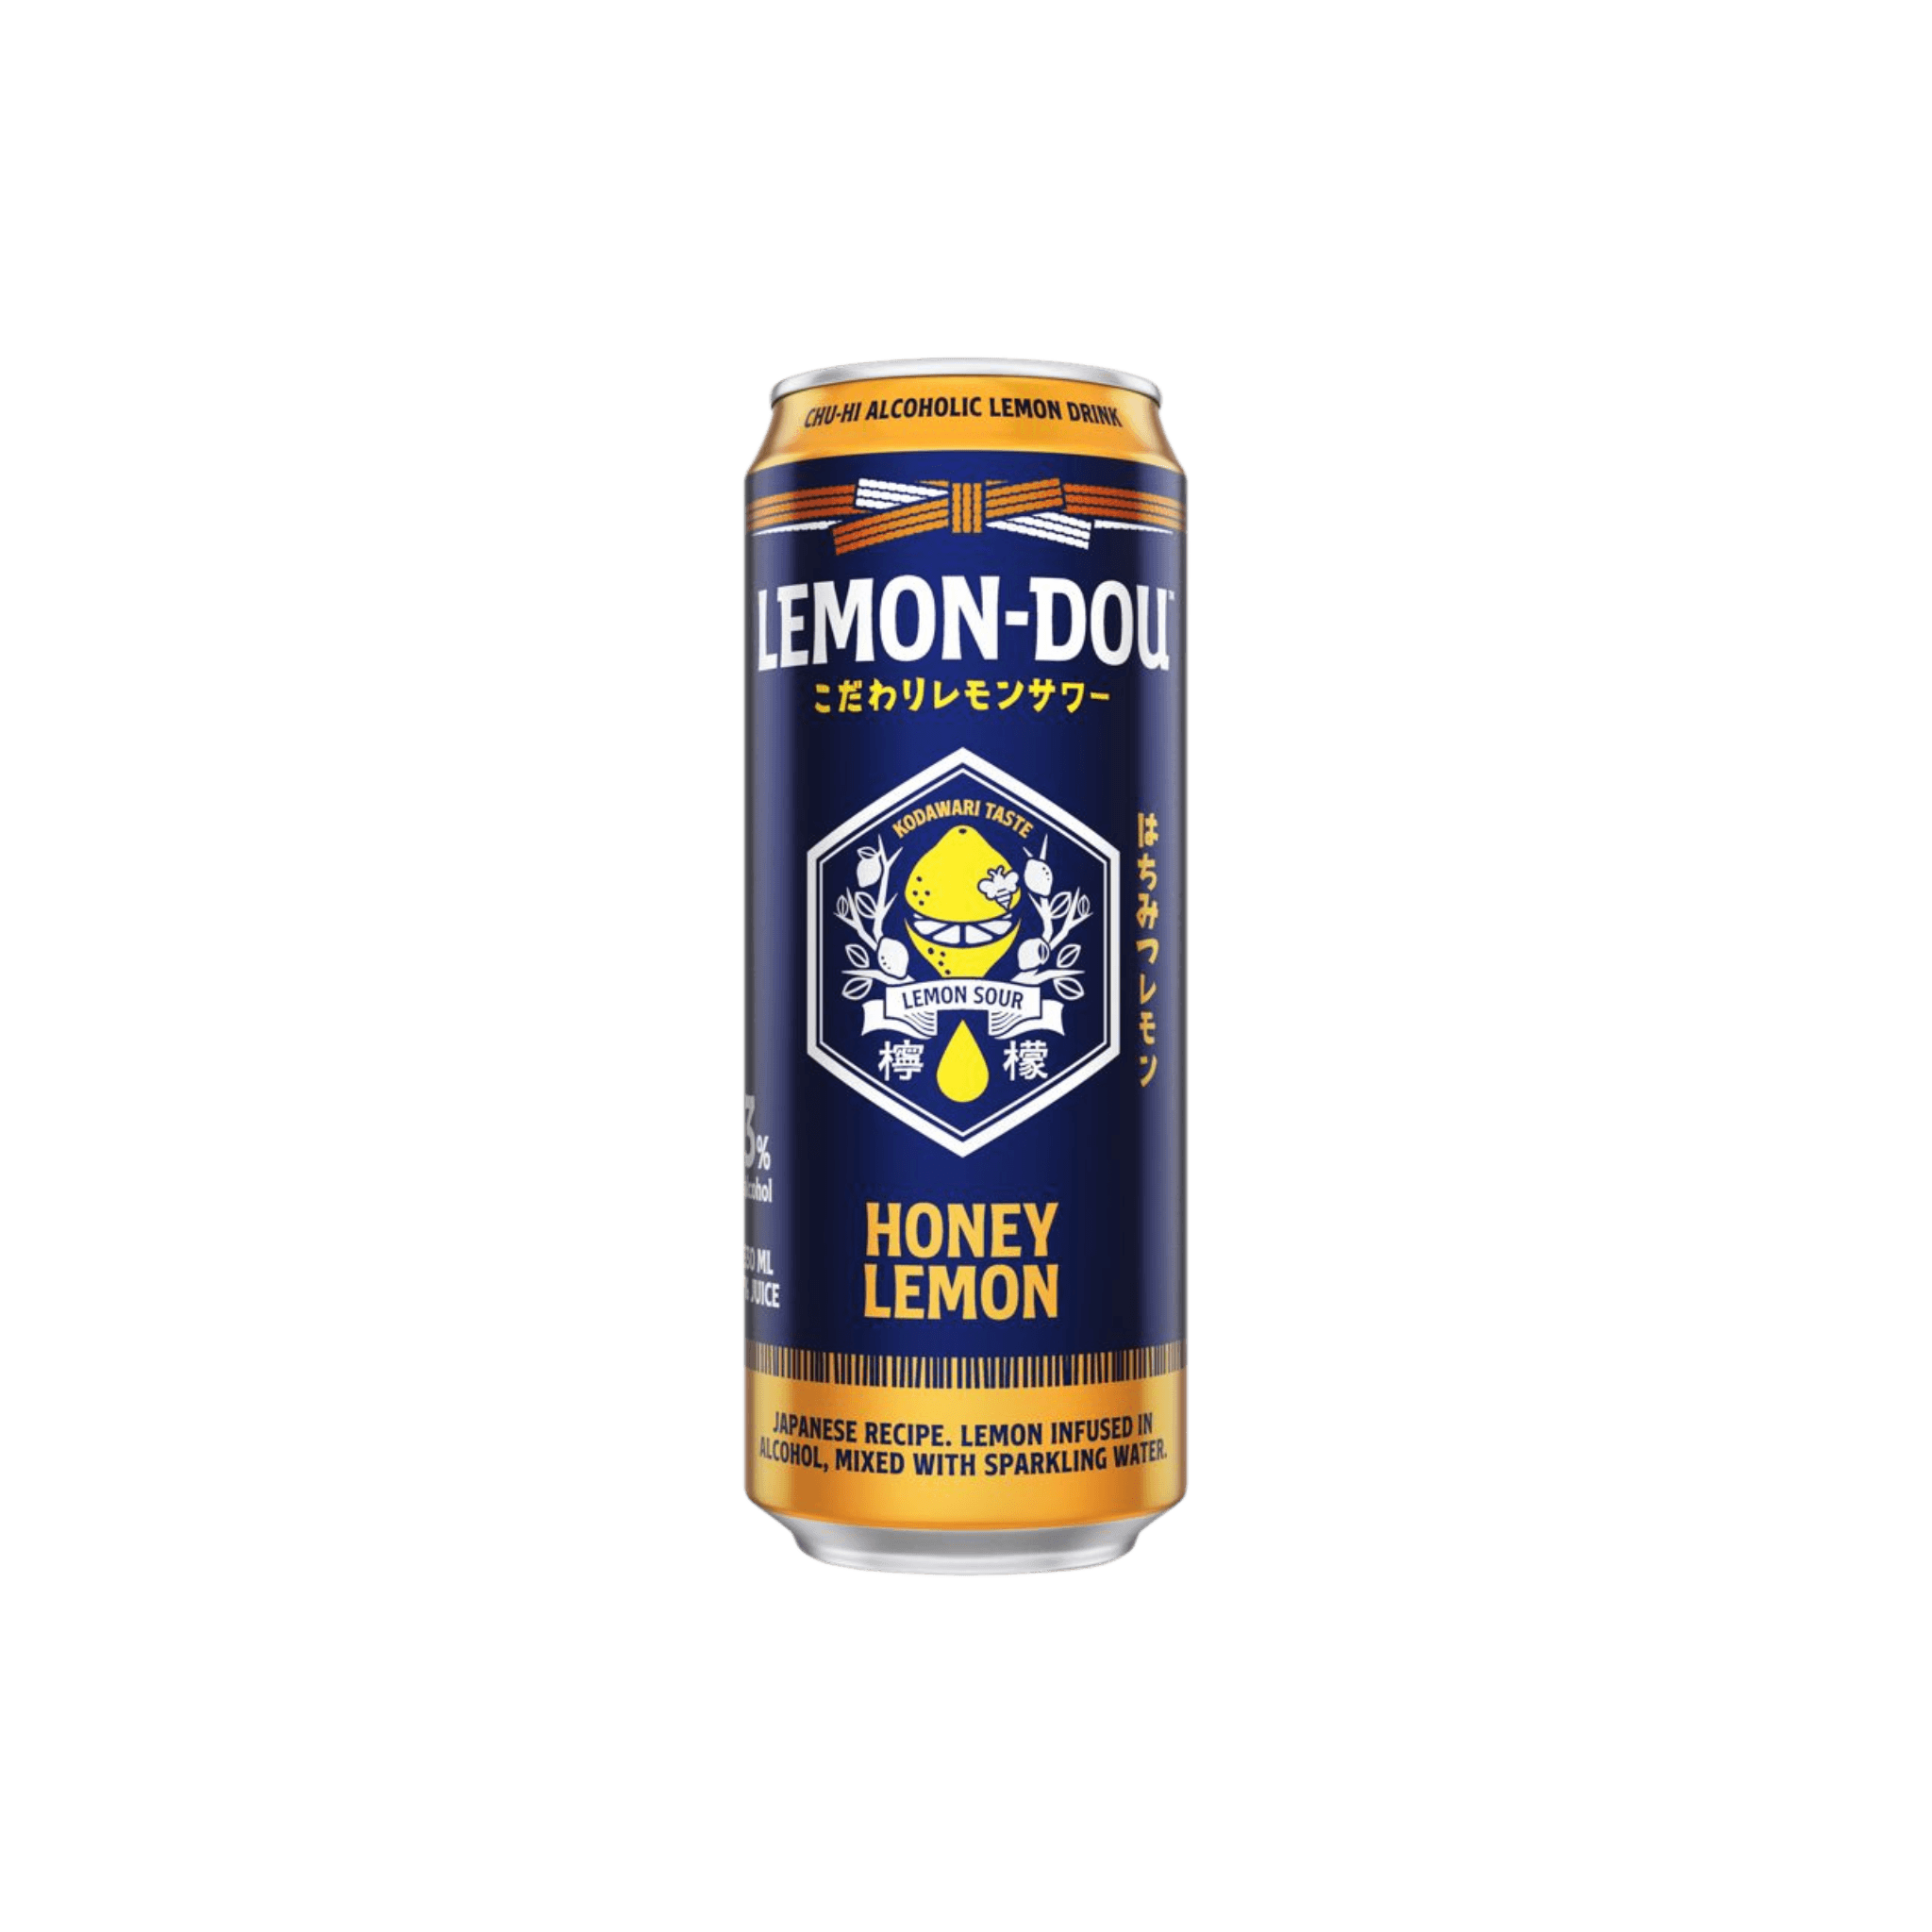 Lemon-dou Honey Lemon 330ml at ₱79.00